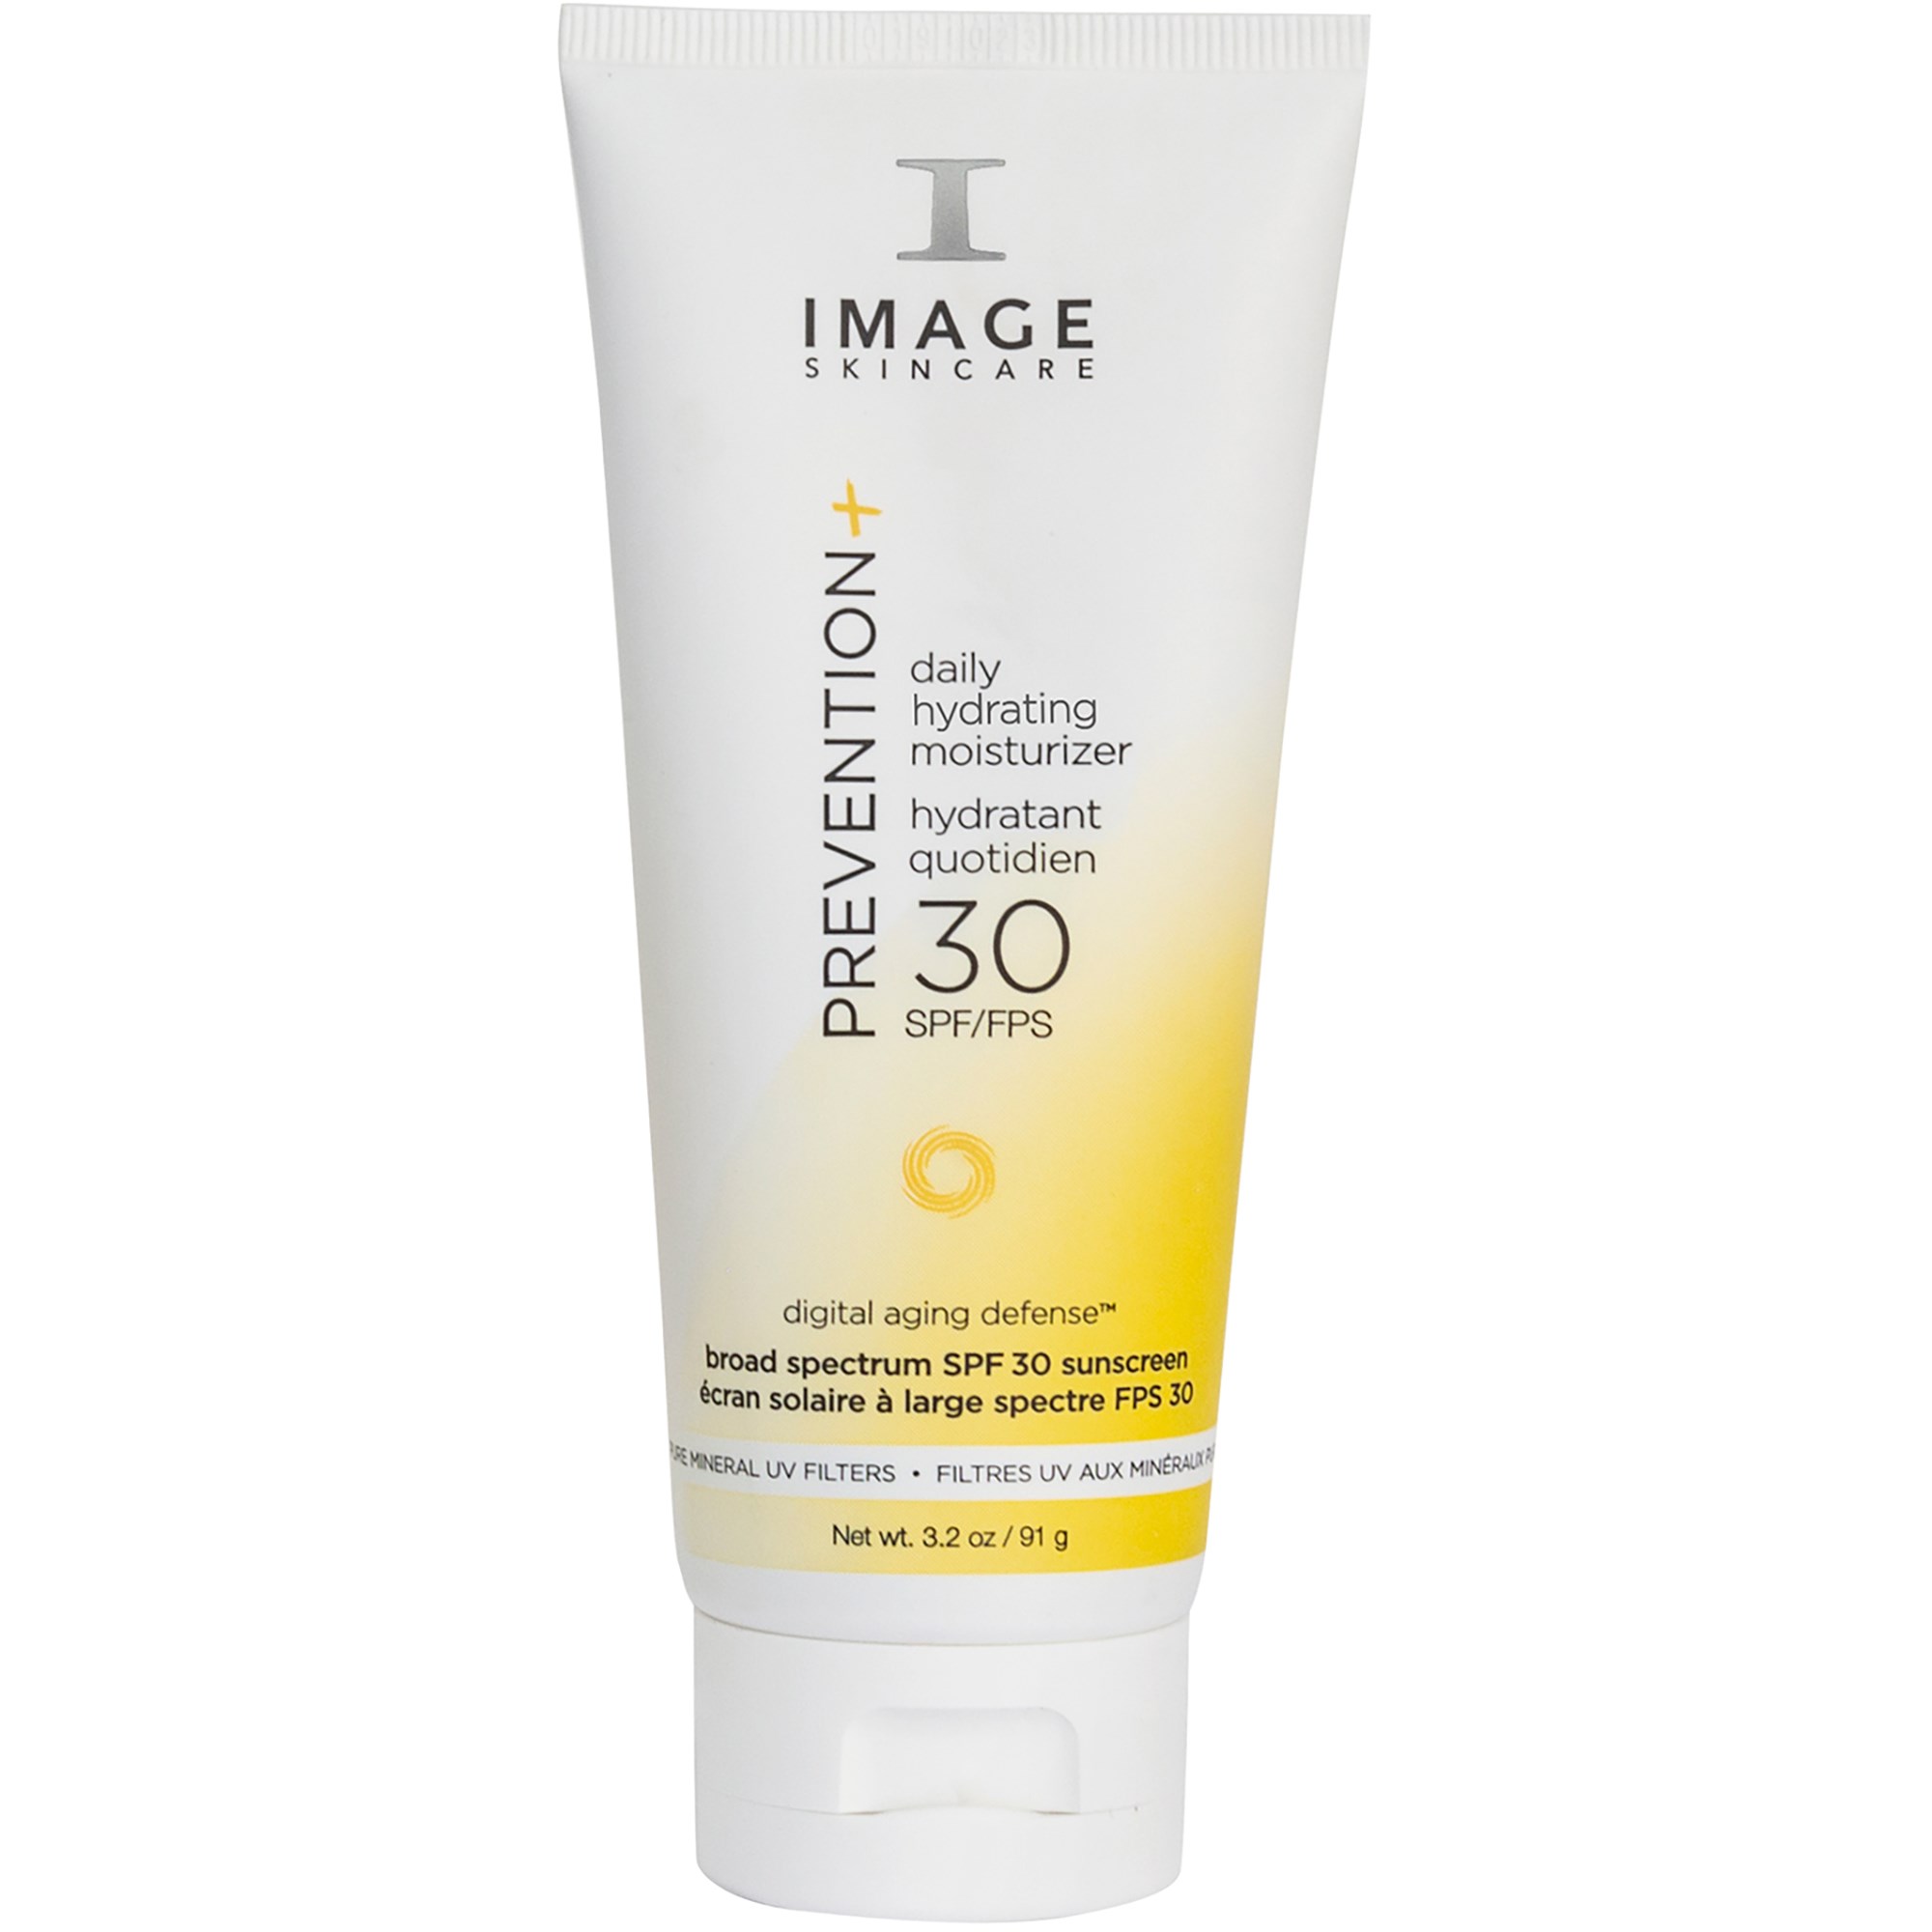 IMAGE Skincare Prevention+ Daily Hydrating Moisturizer SPF 30 91 g